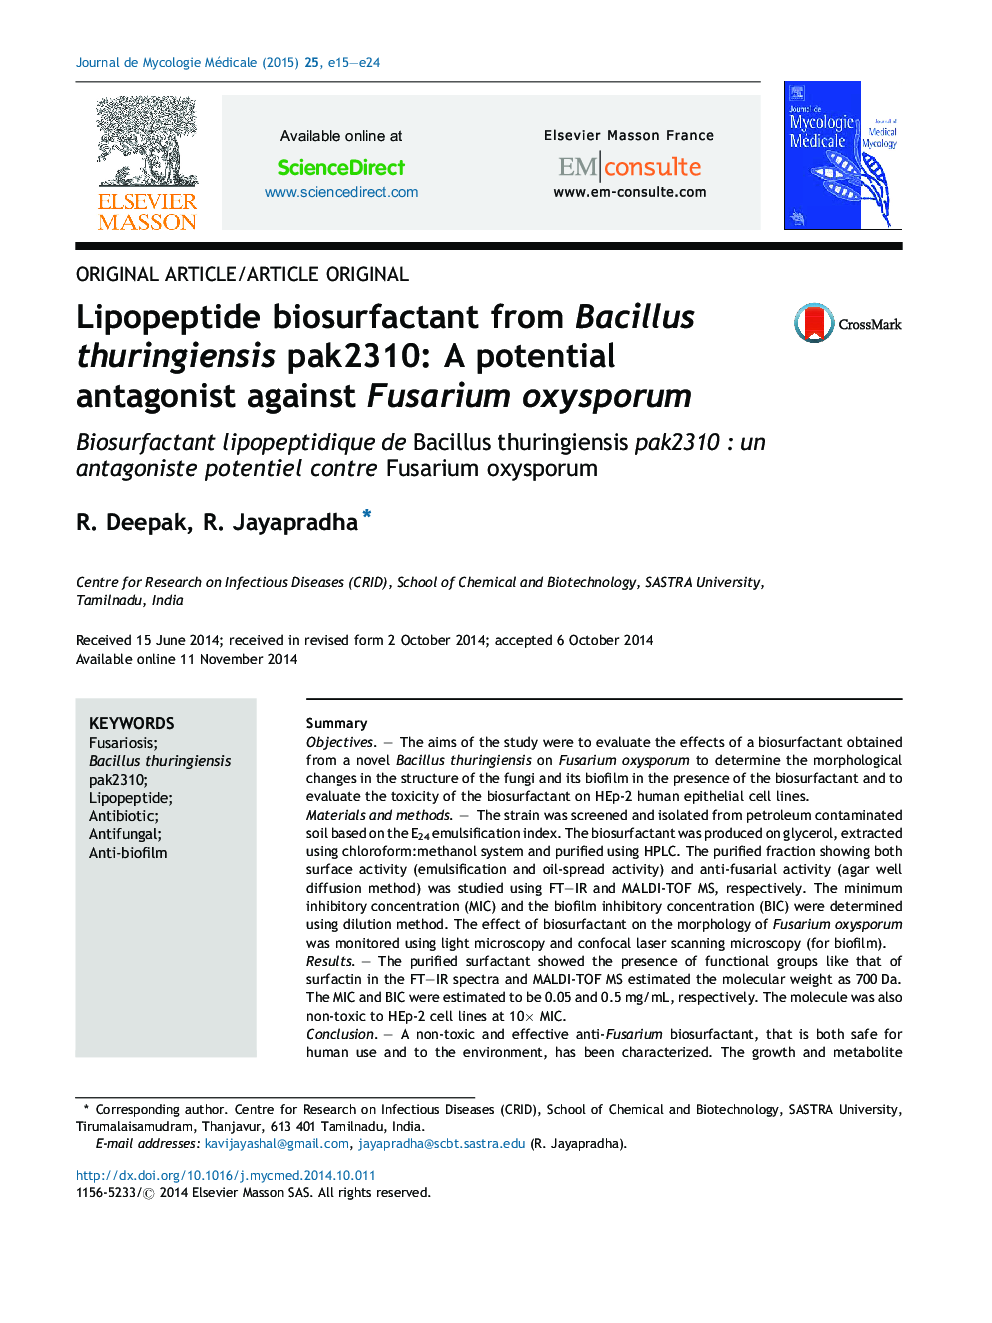 Lipopeptide biosurfactant from Bacillus thuringiensis pak2310: A potential antagonist against Fusarium oxysporum